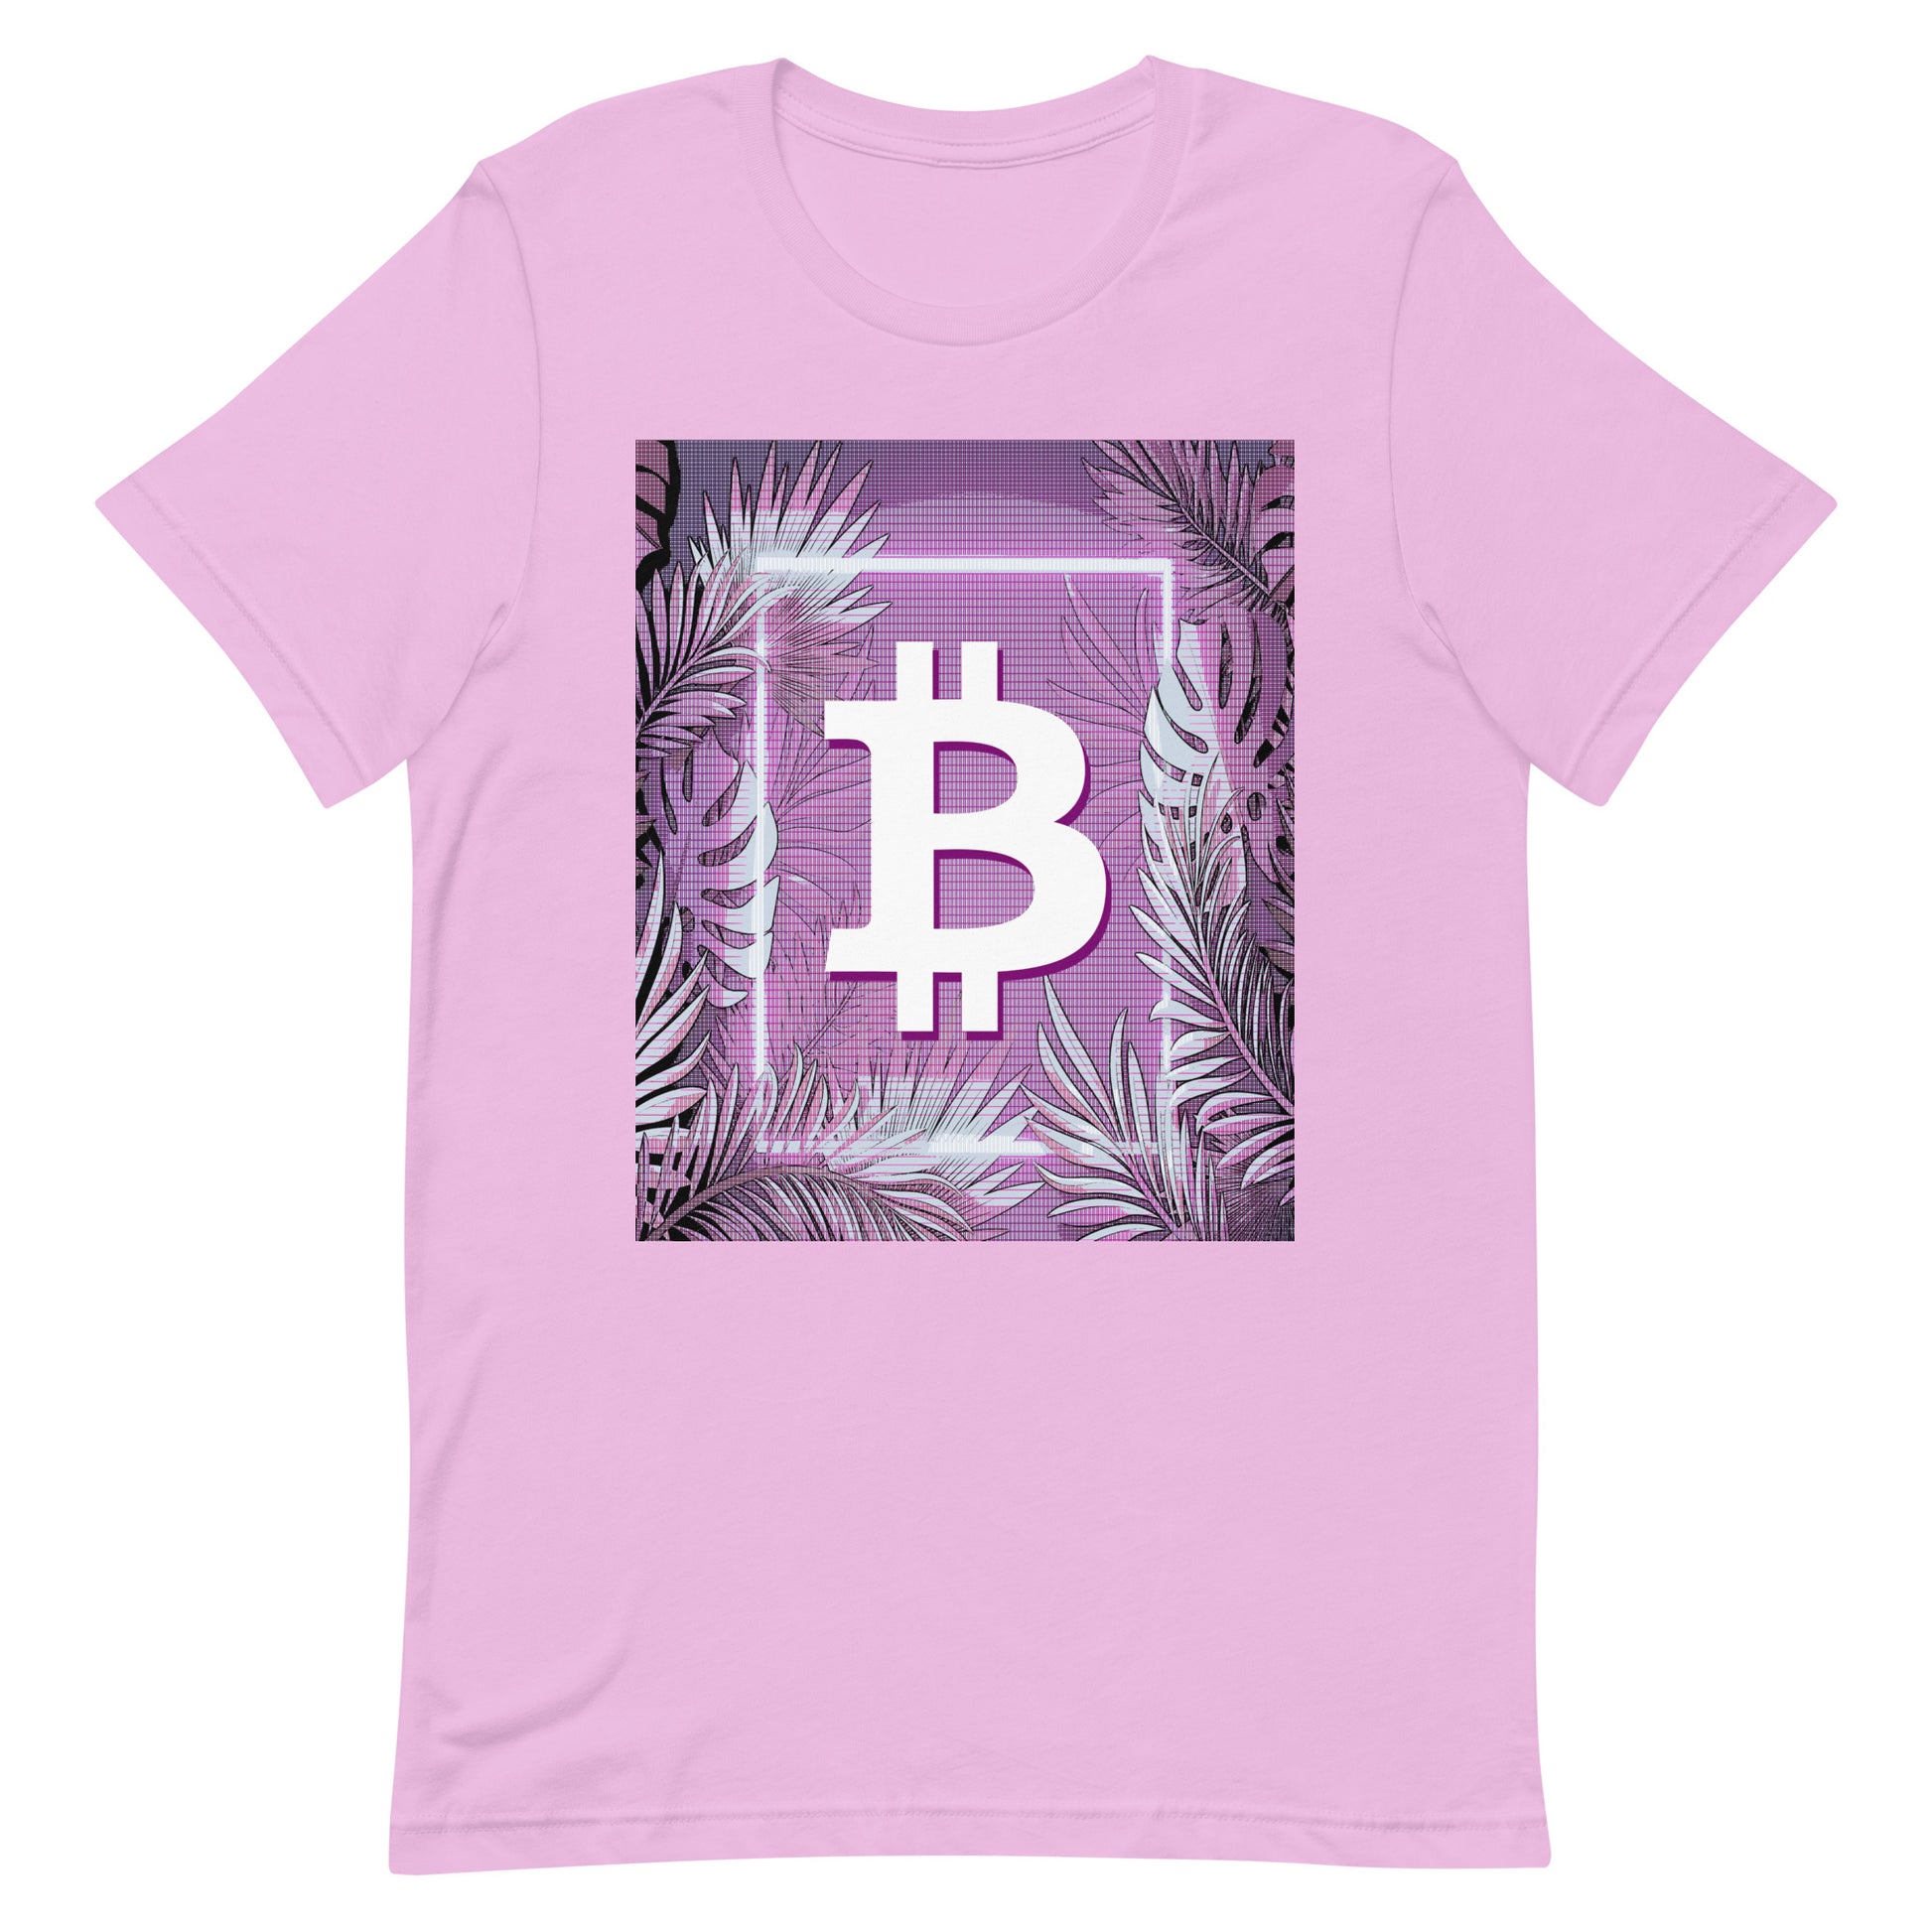 Bitcoin Forest | Shirts & Tops | bitcoin-forest-tee-1 | printful